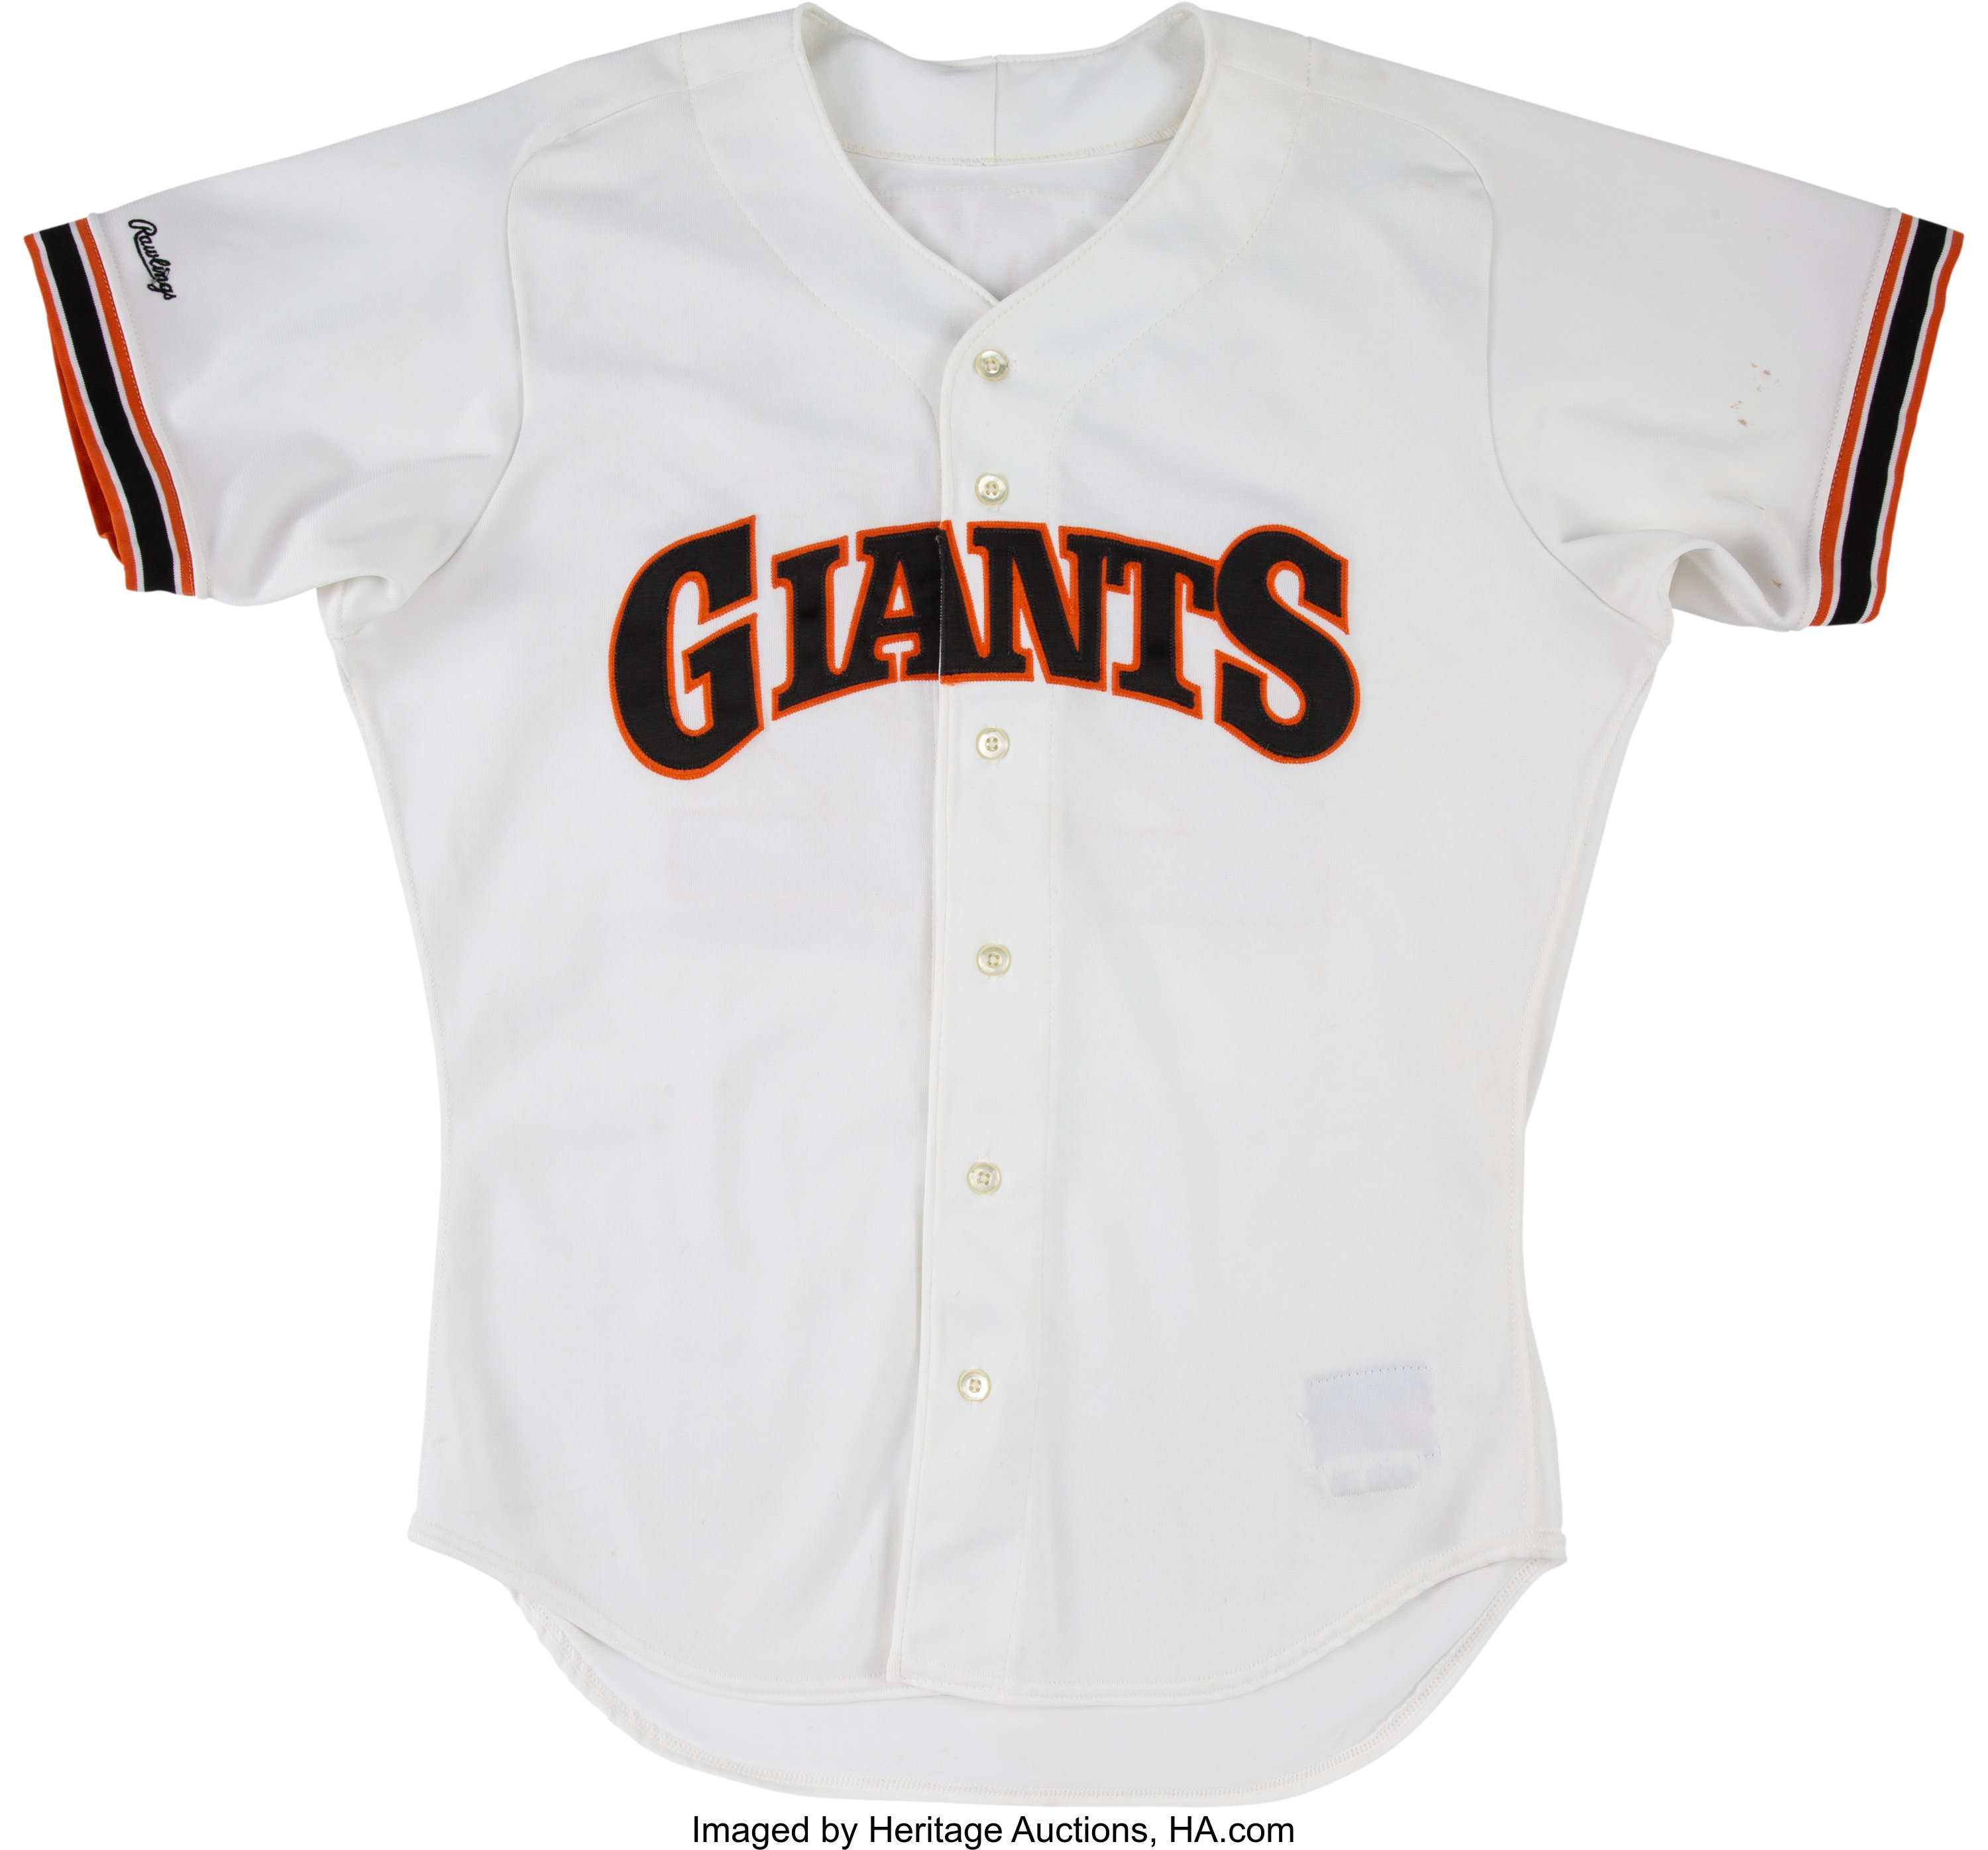 San Francisco Giants Jerseys, Giants Jersey, San Francisco Giants Uniforms